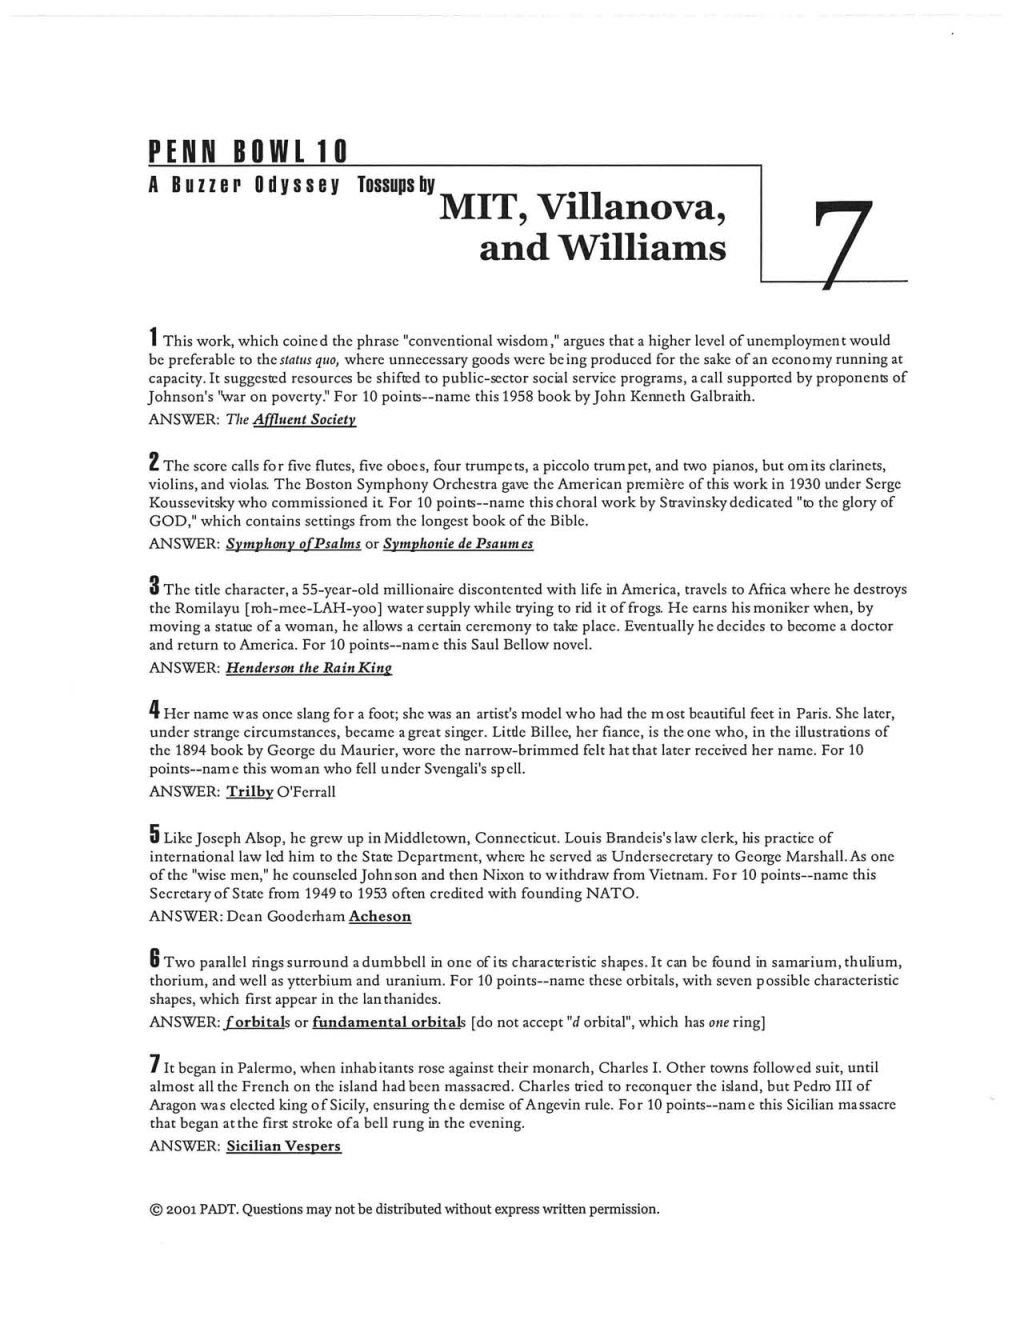 MIT + Villanova + Williams.Pdf